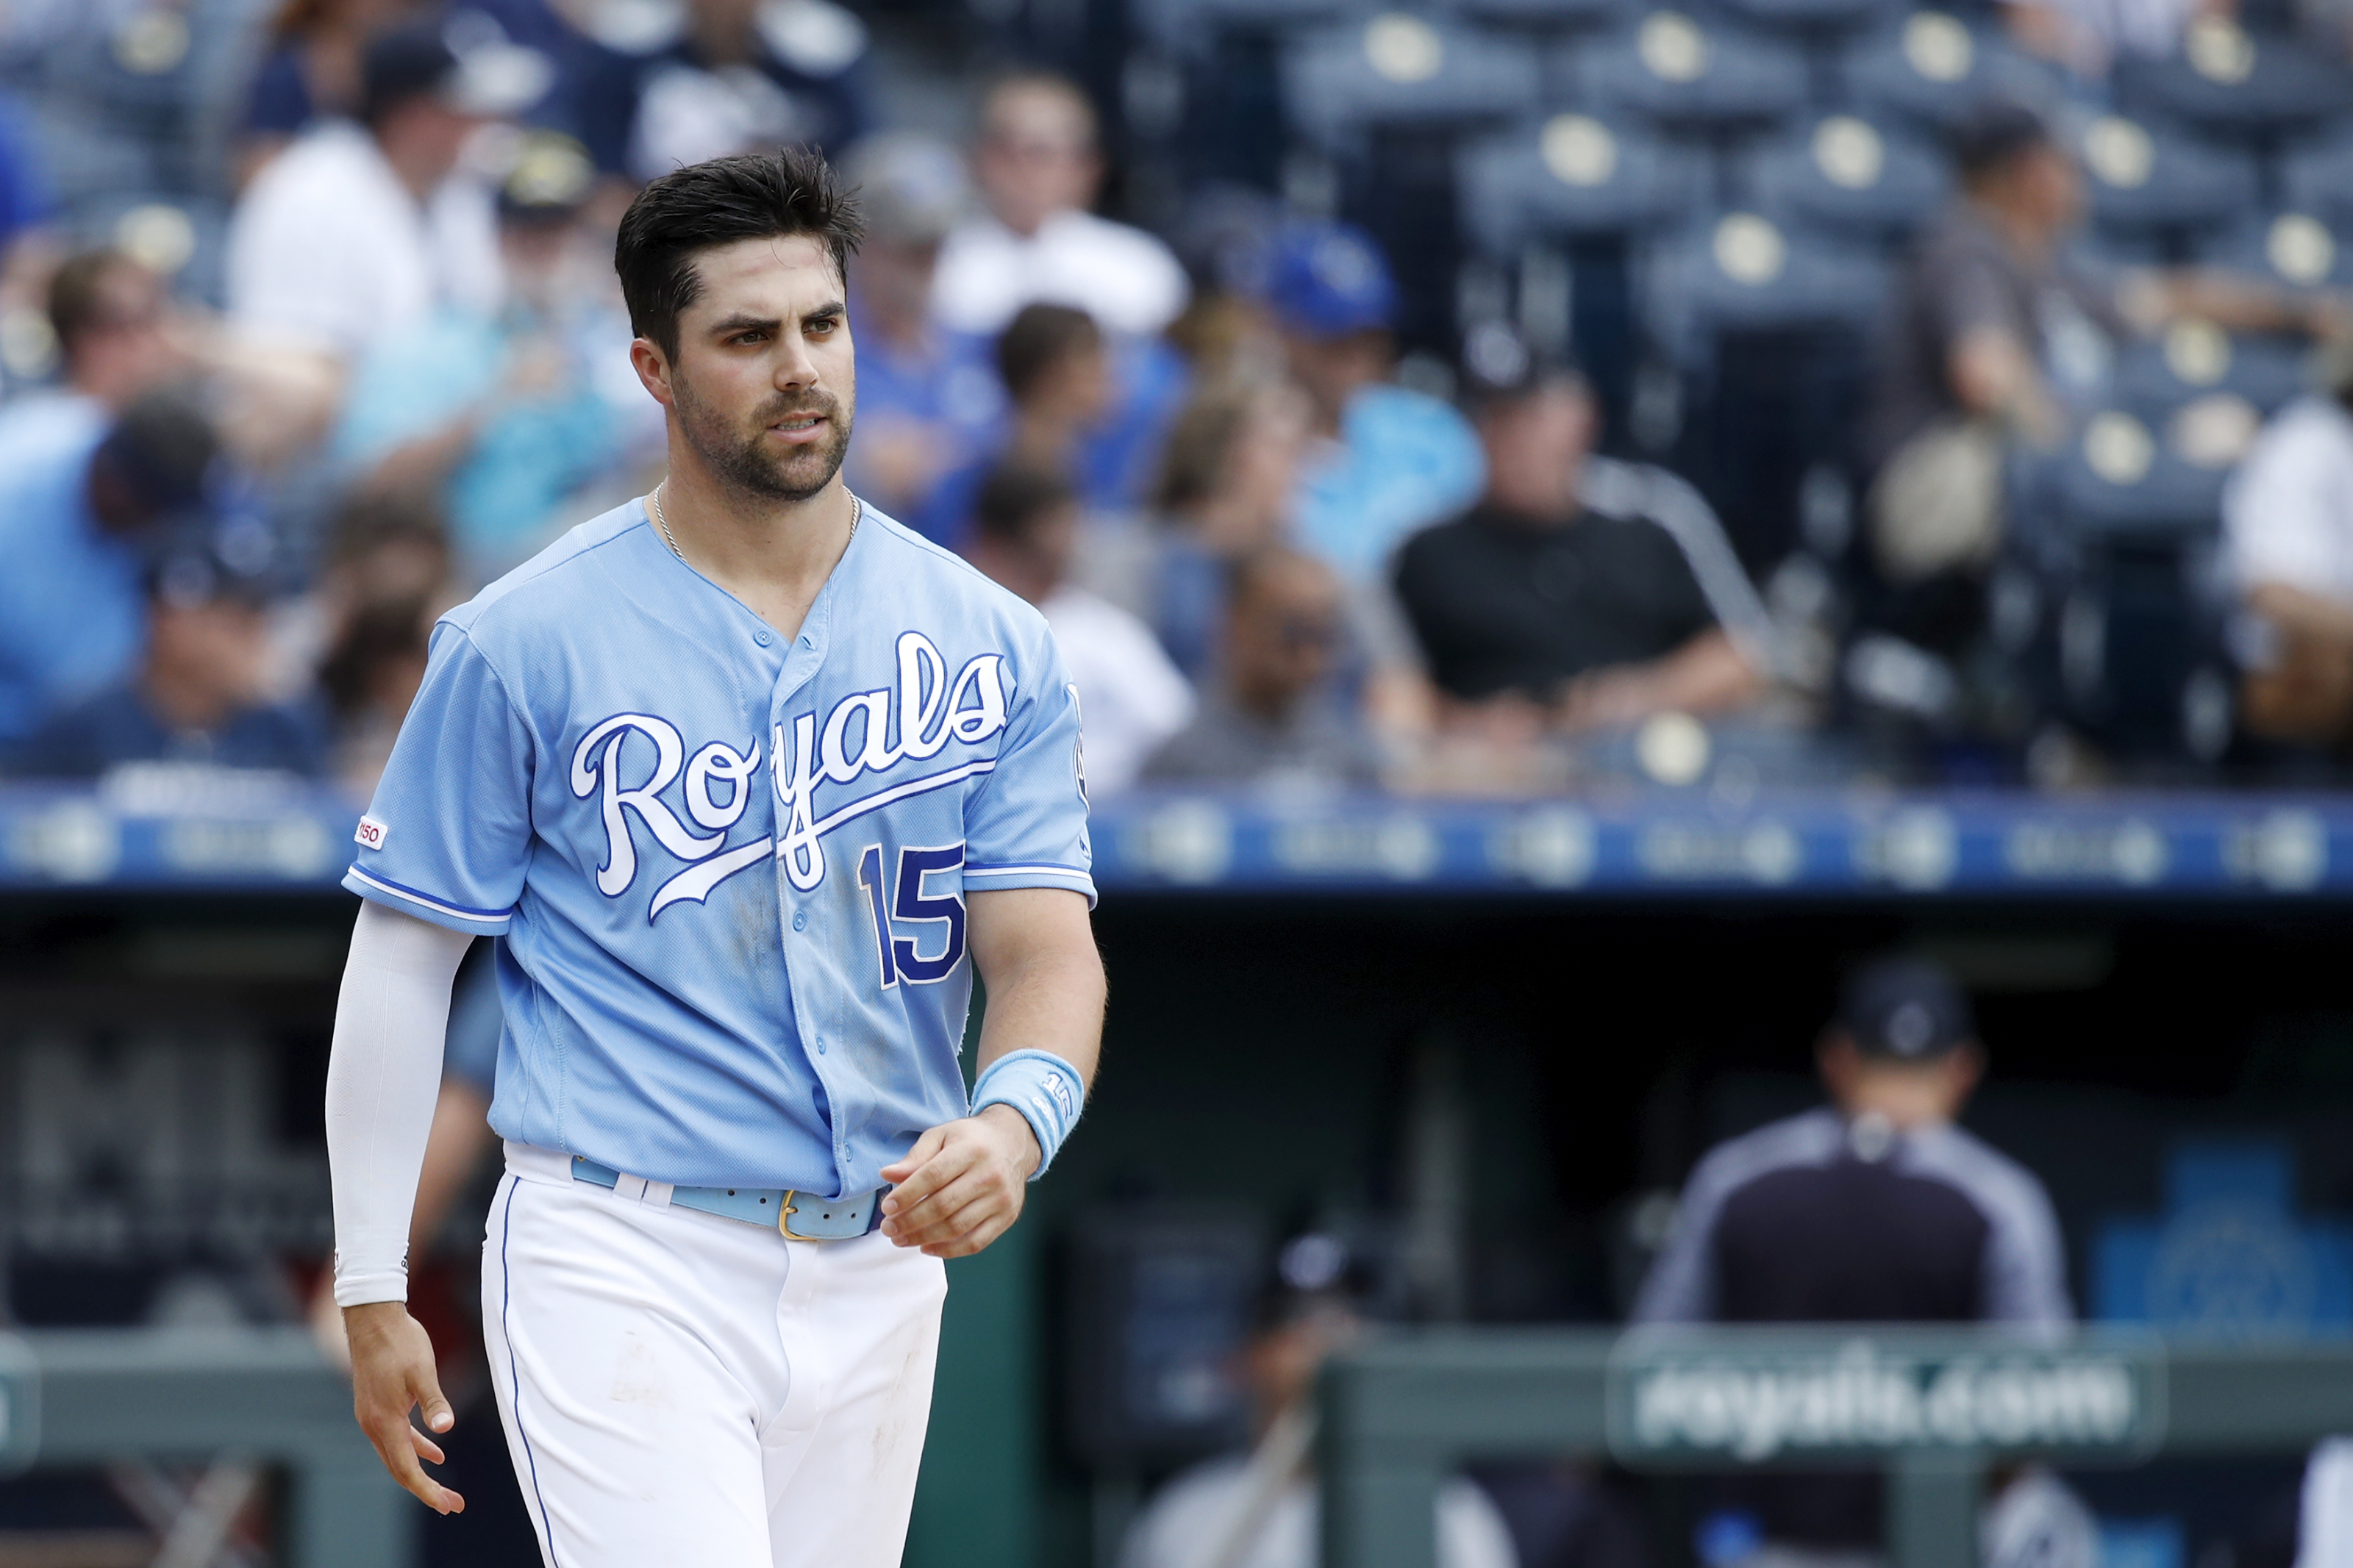 May 30, 2019: Kansas City Royals second baseman Whit Merrifield